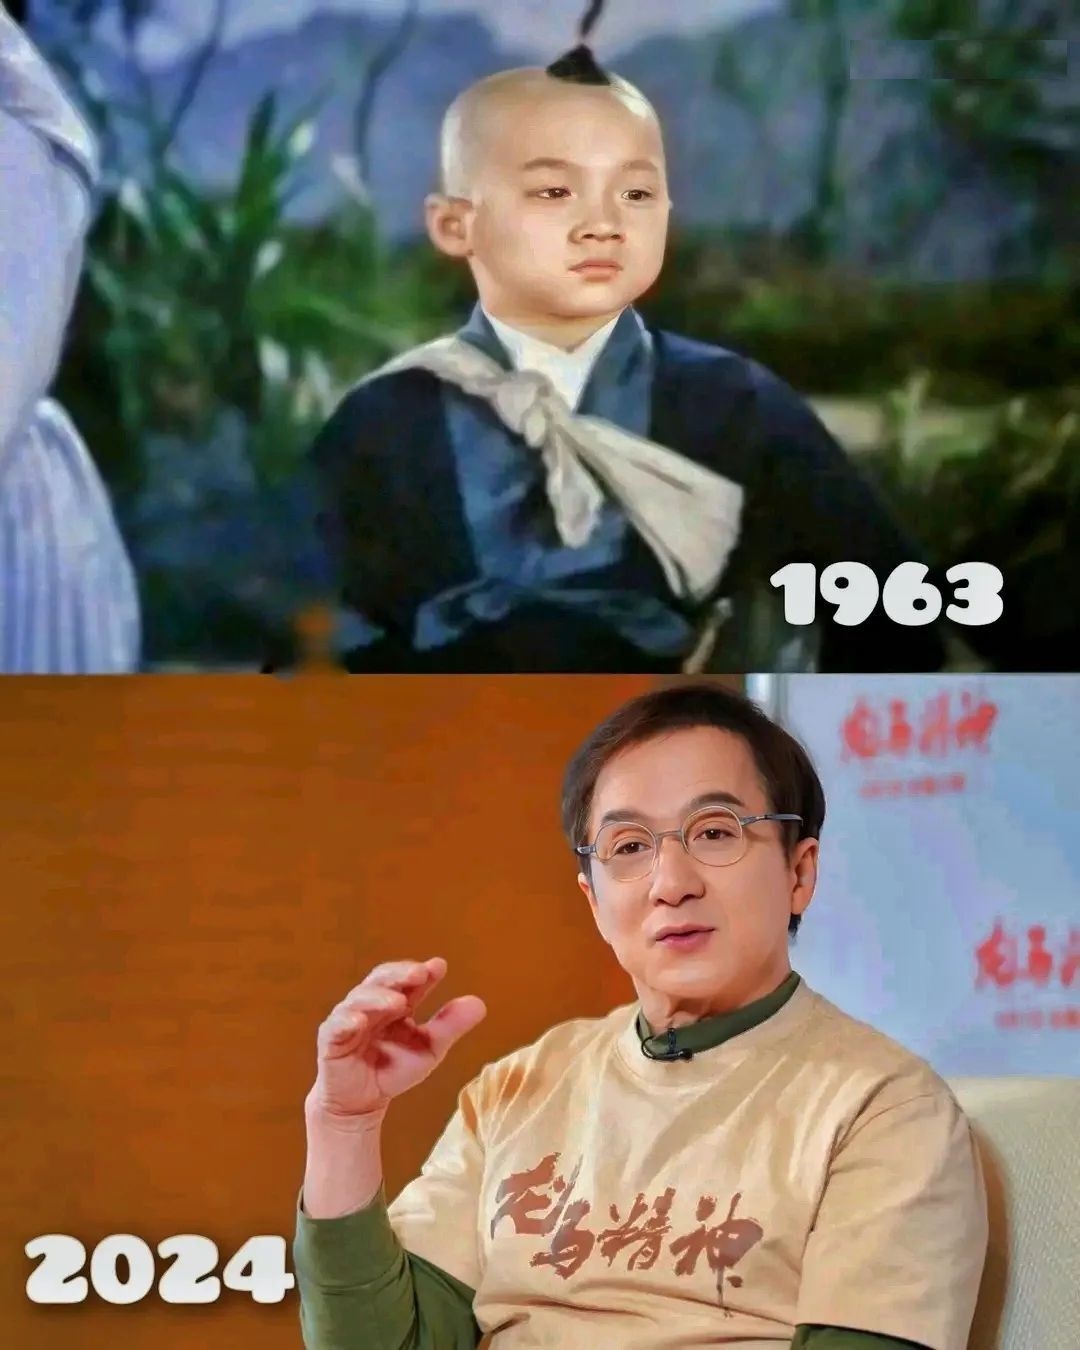 عکس | جکی چان وقتی ۹ ساله بود!